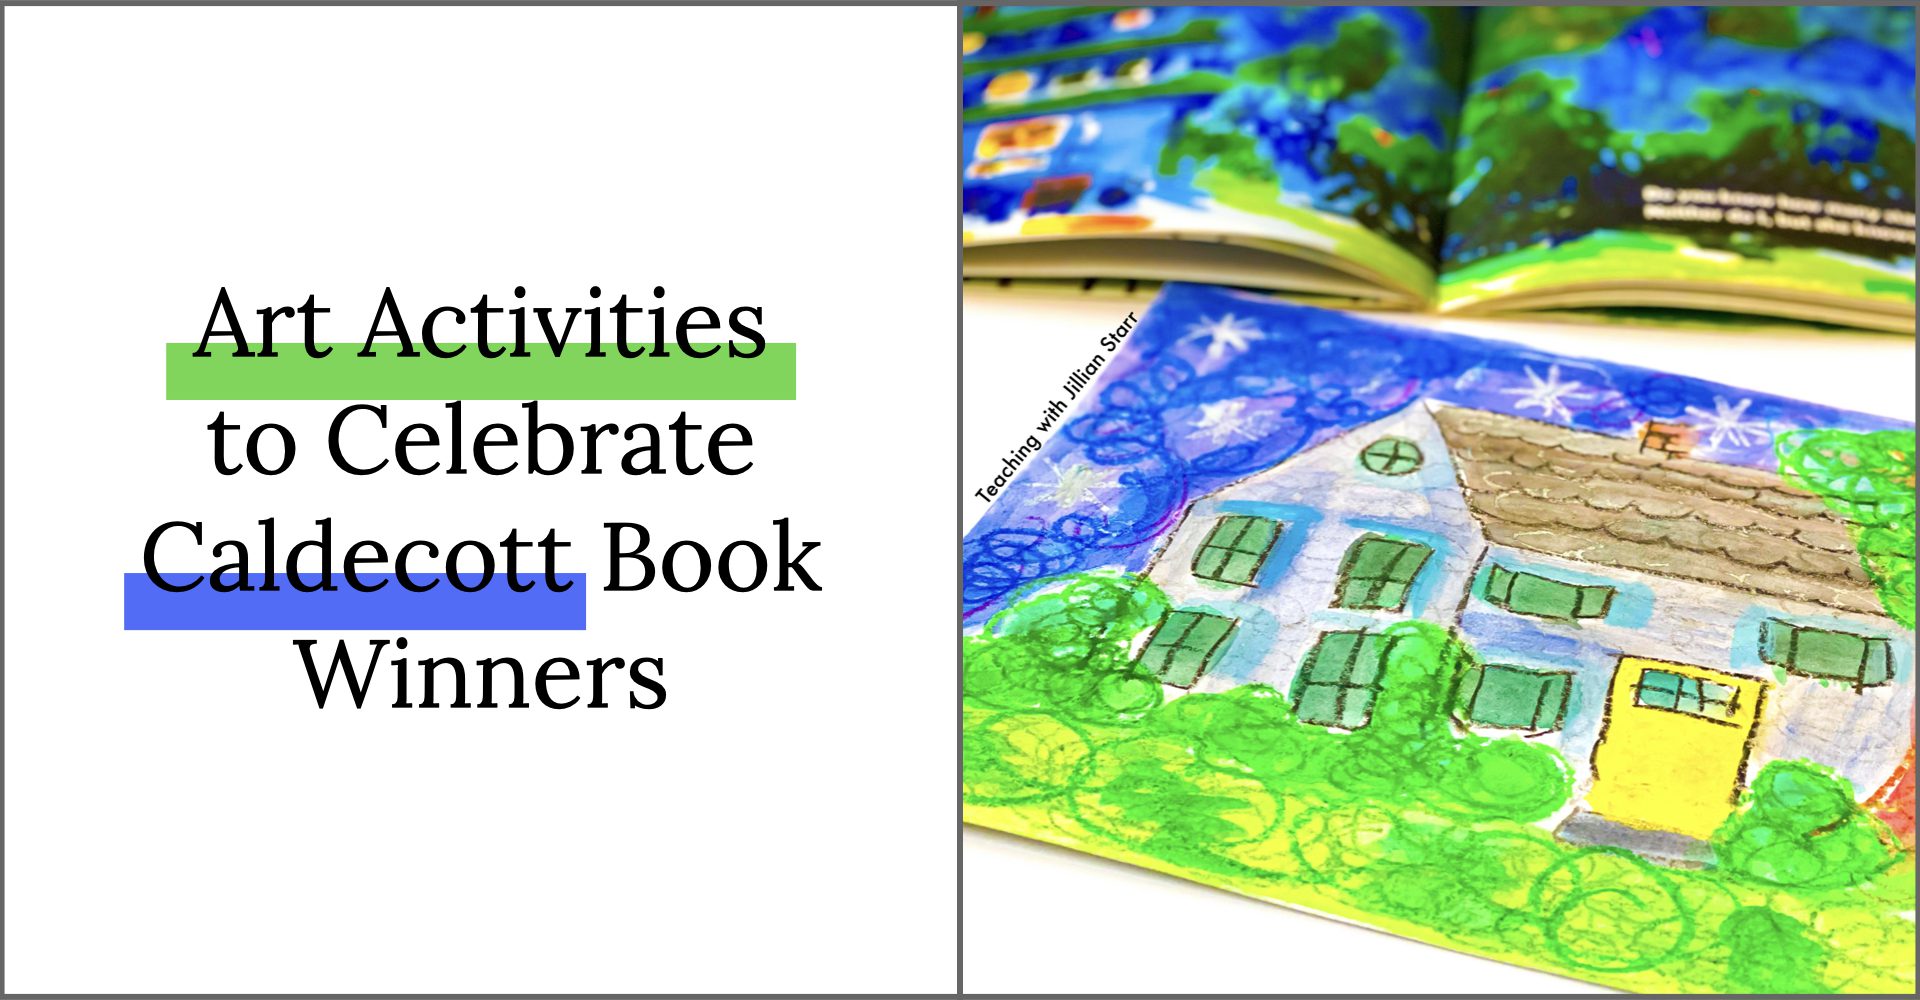 Art Activities to Celebrate Caldecott Book Winners